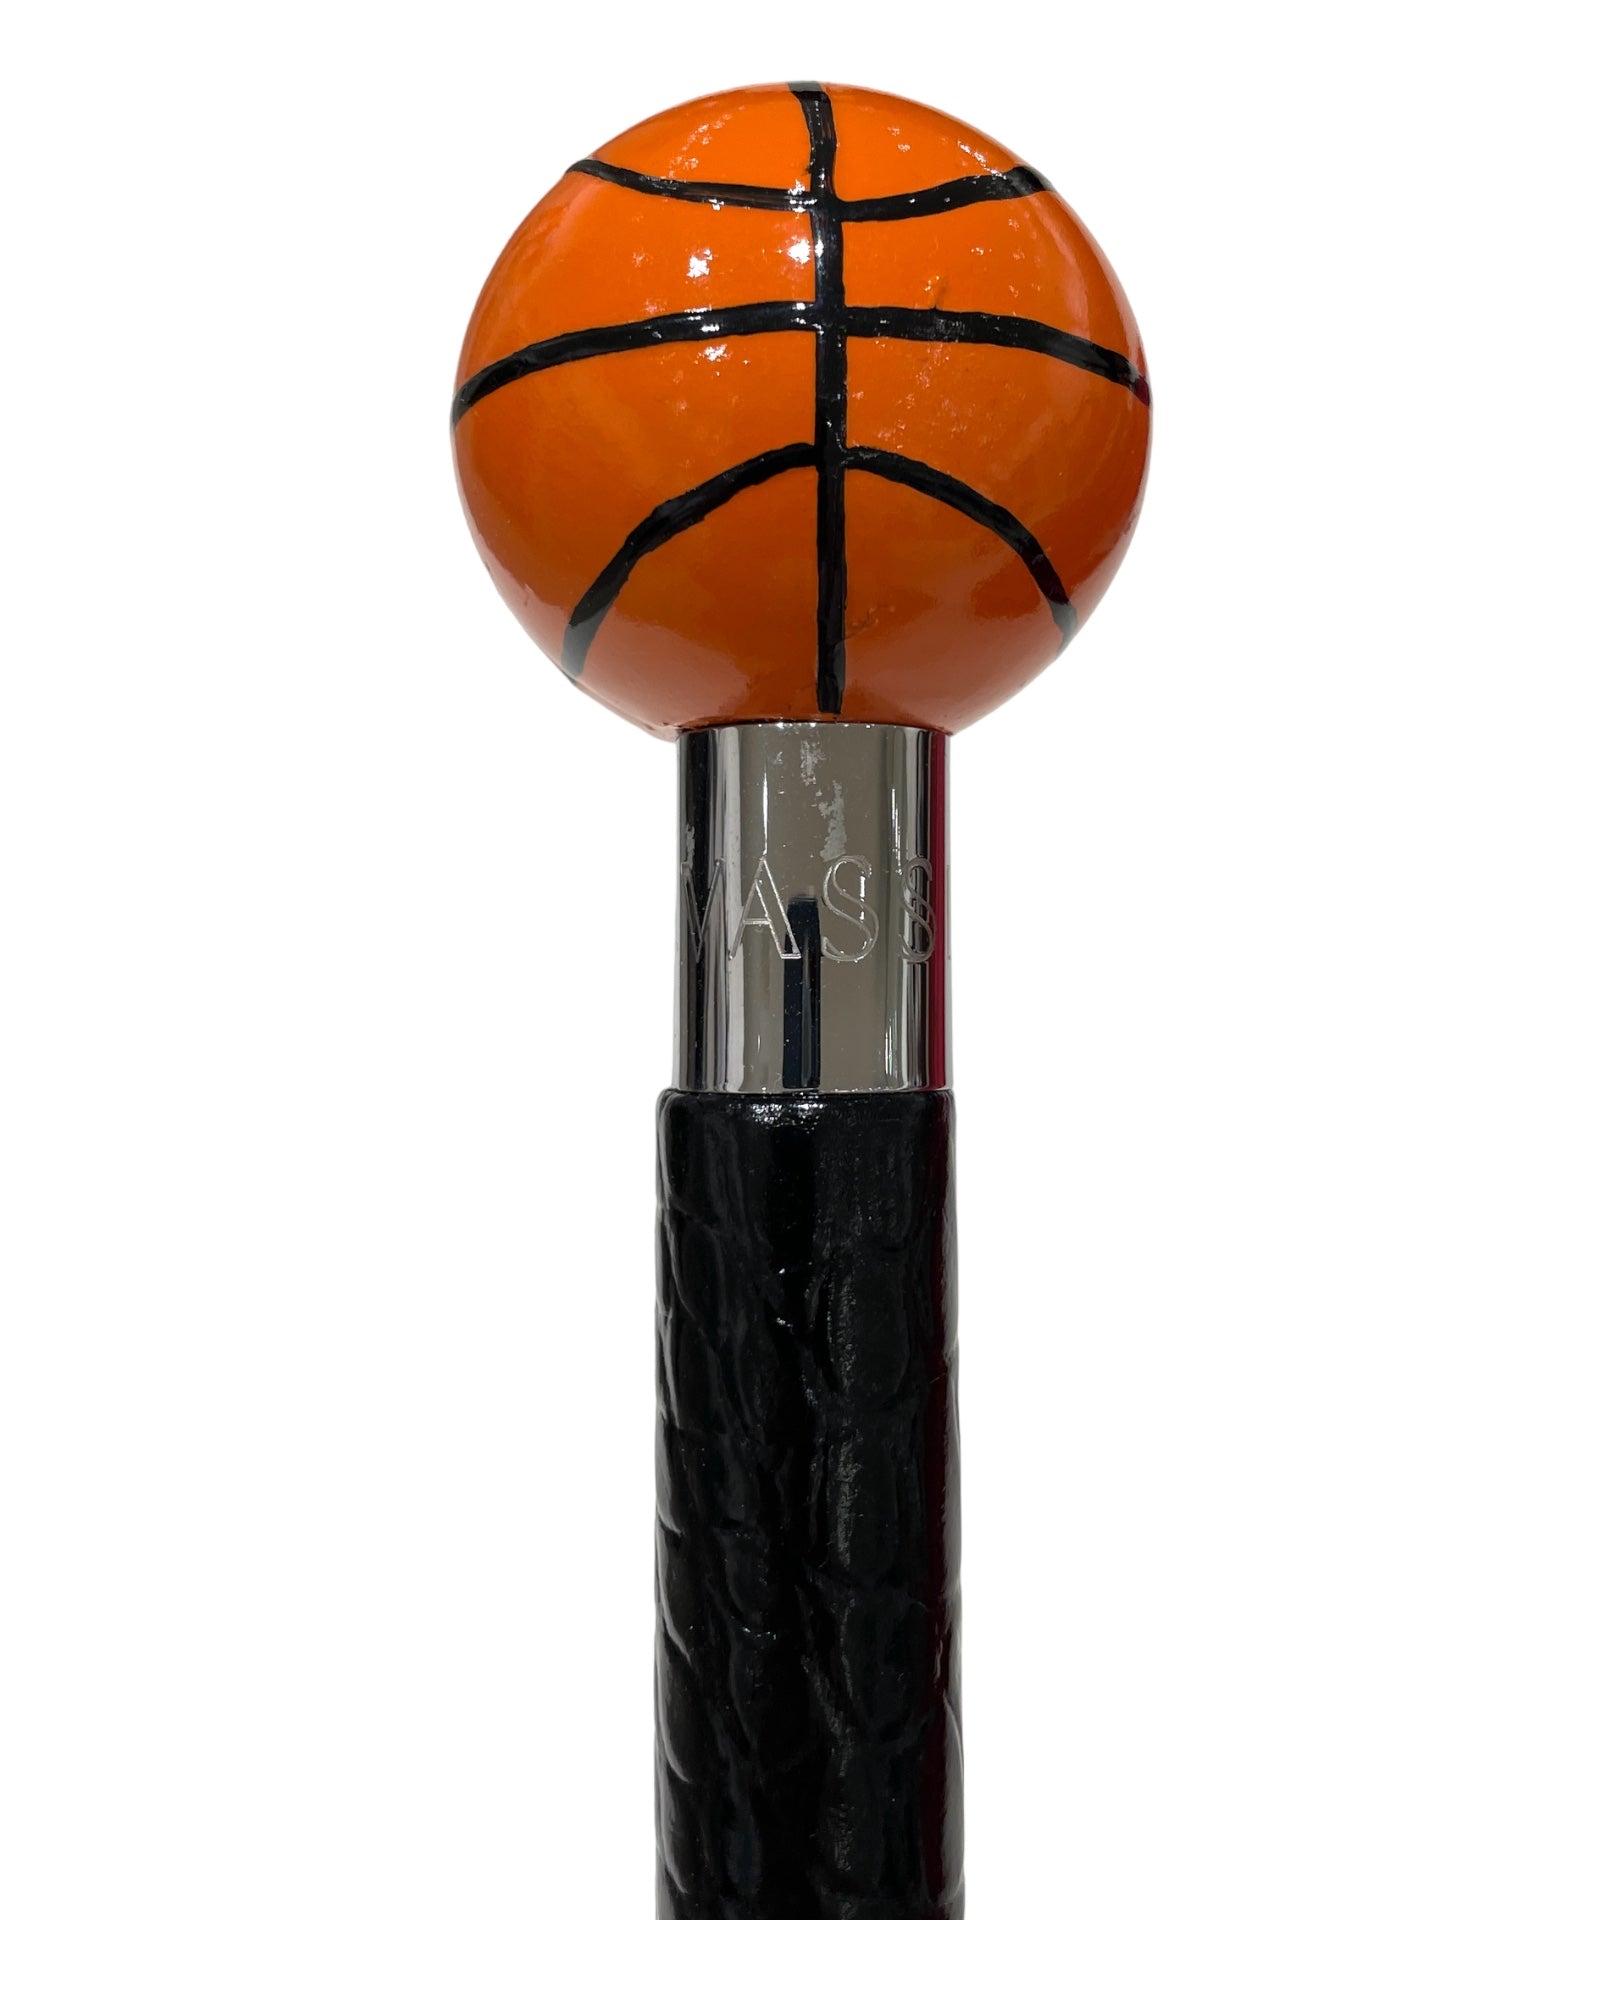 Basketball Long Shoehorn - Black